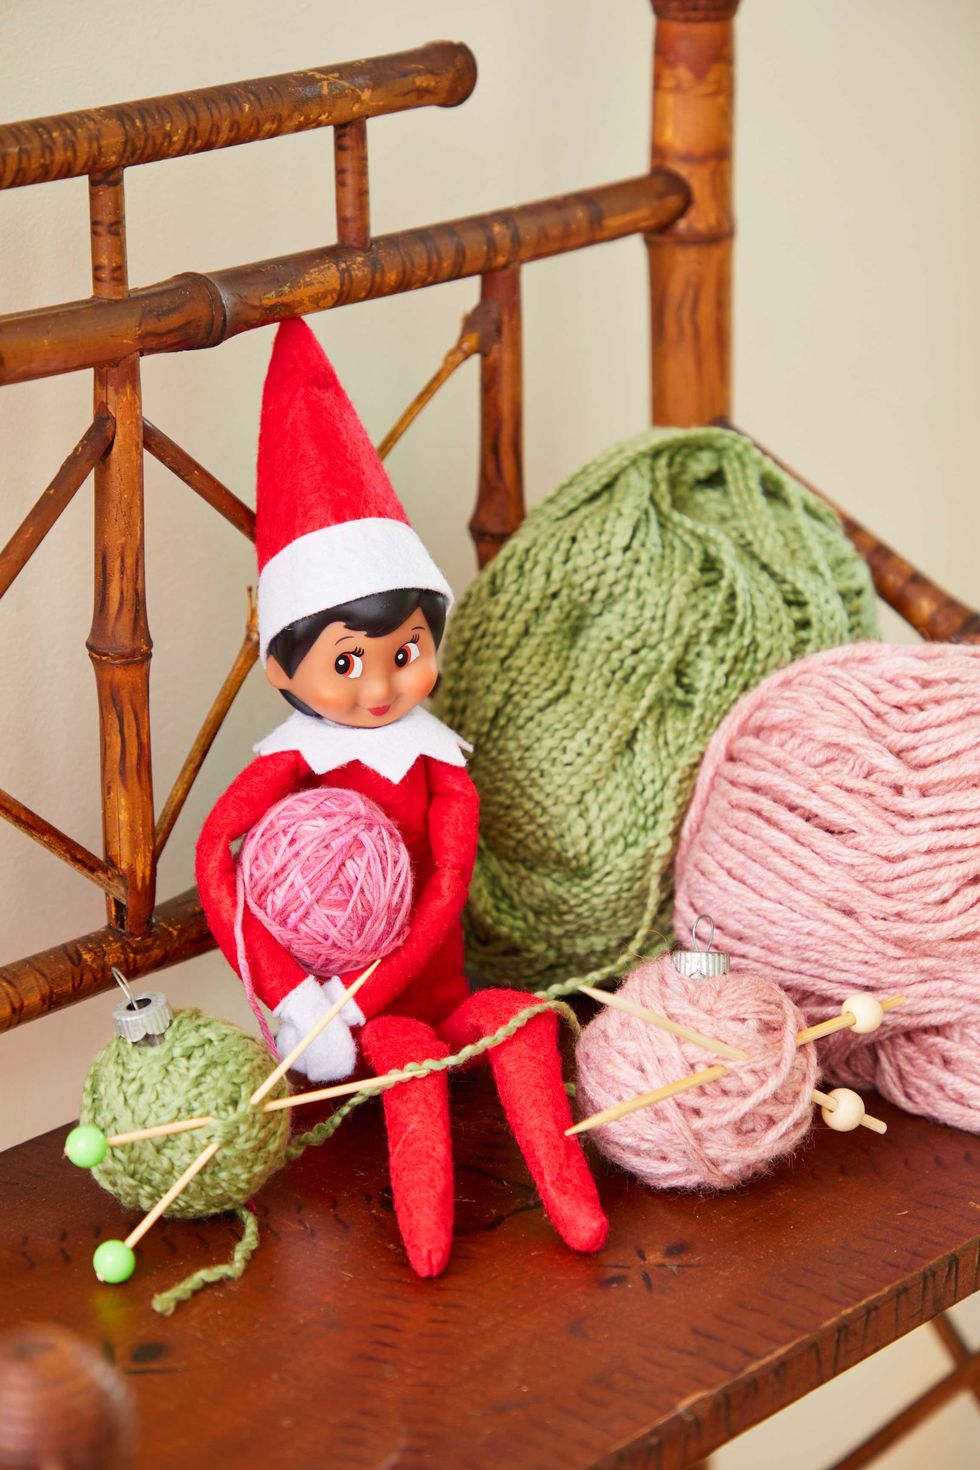 Elf knitting on the shelf